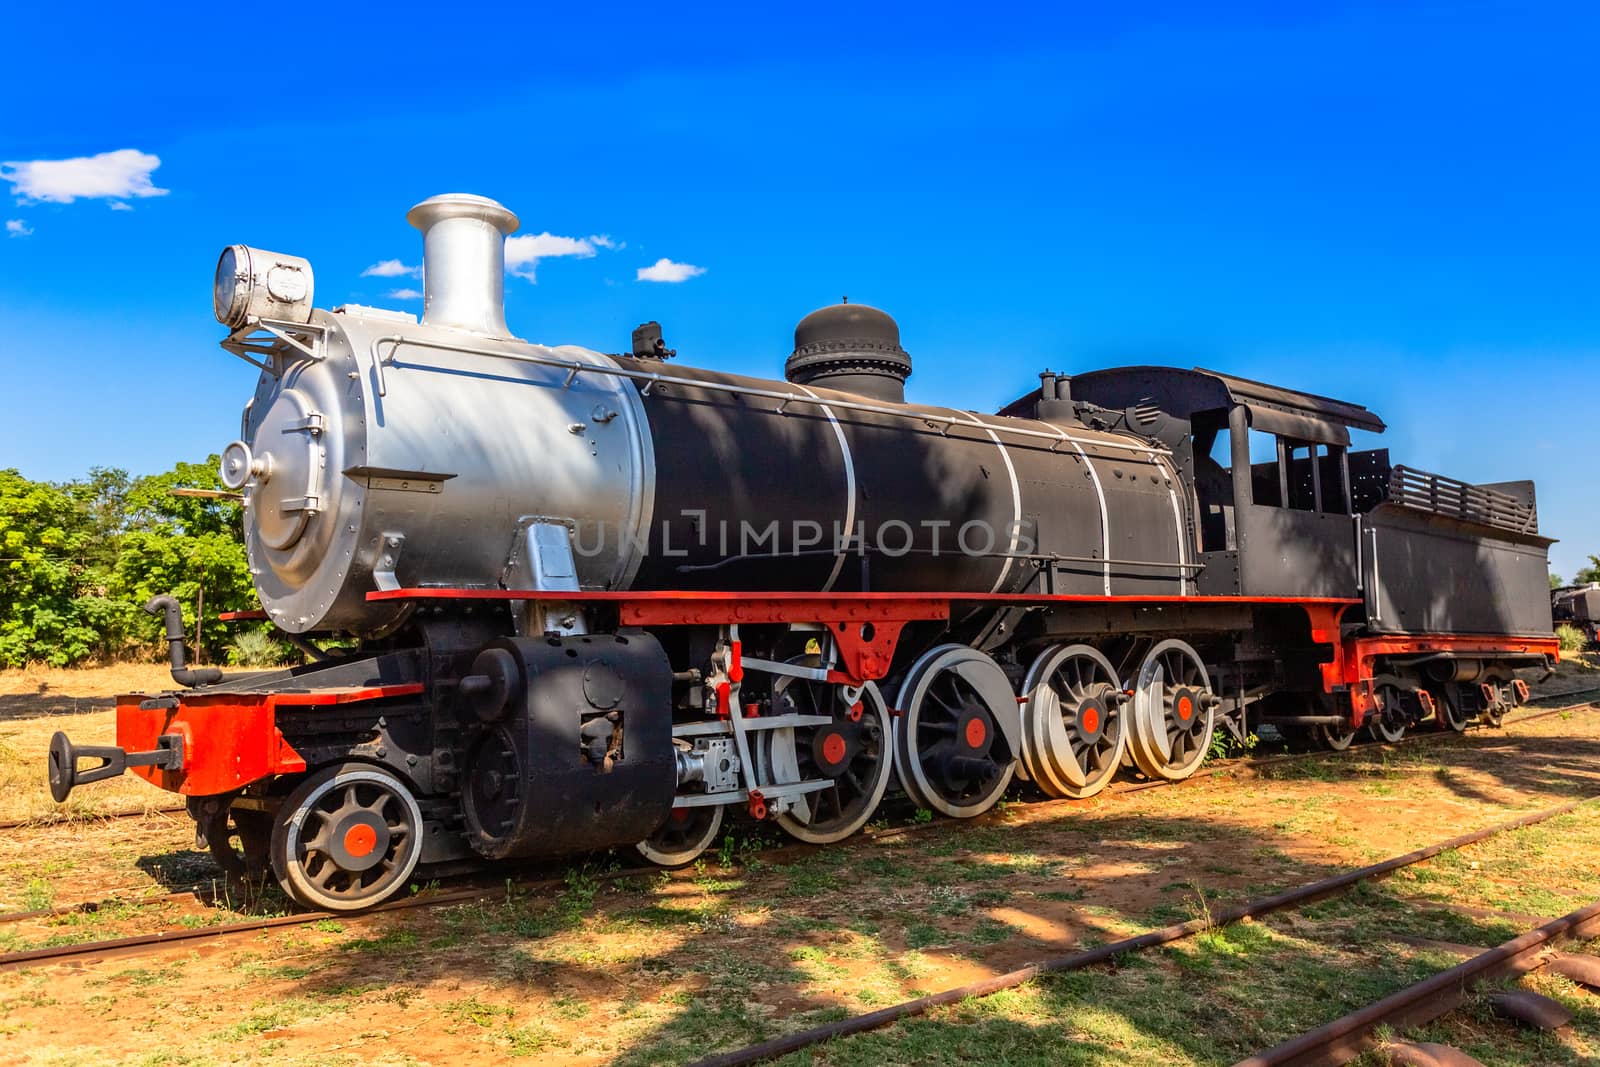 Old retro preserved locomotive train standing on the rails in Livingstone, Zambia